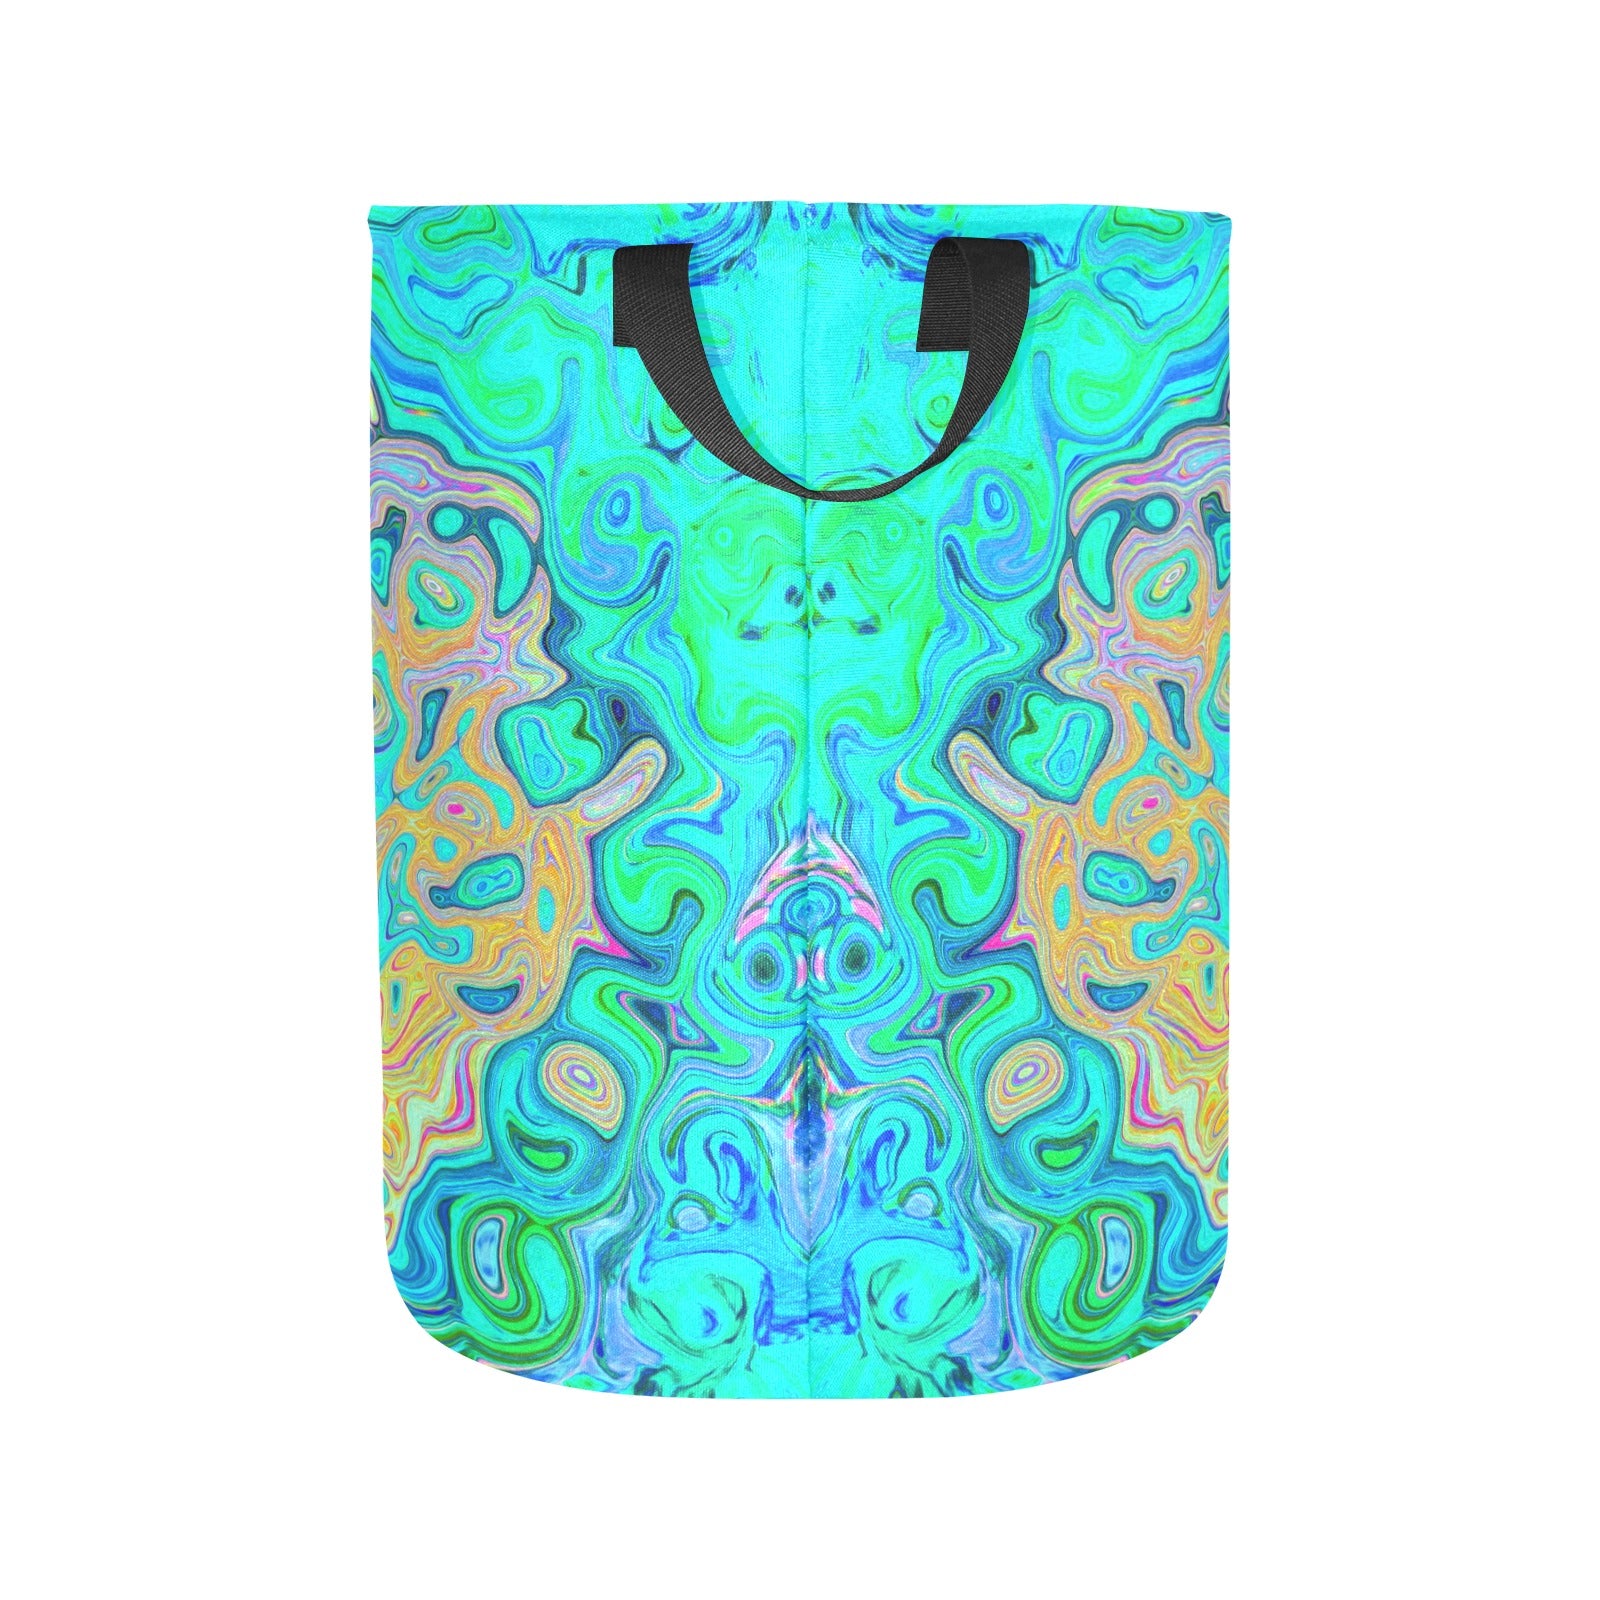 Fabric Laundry Basket with Handles, Groovy Abstract Retro Rainbow Liquid Swirl